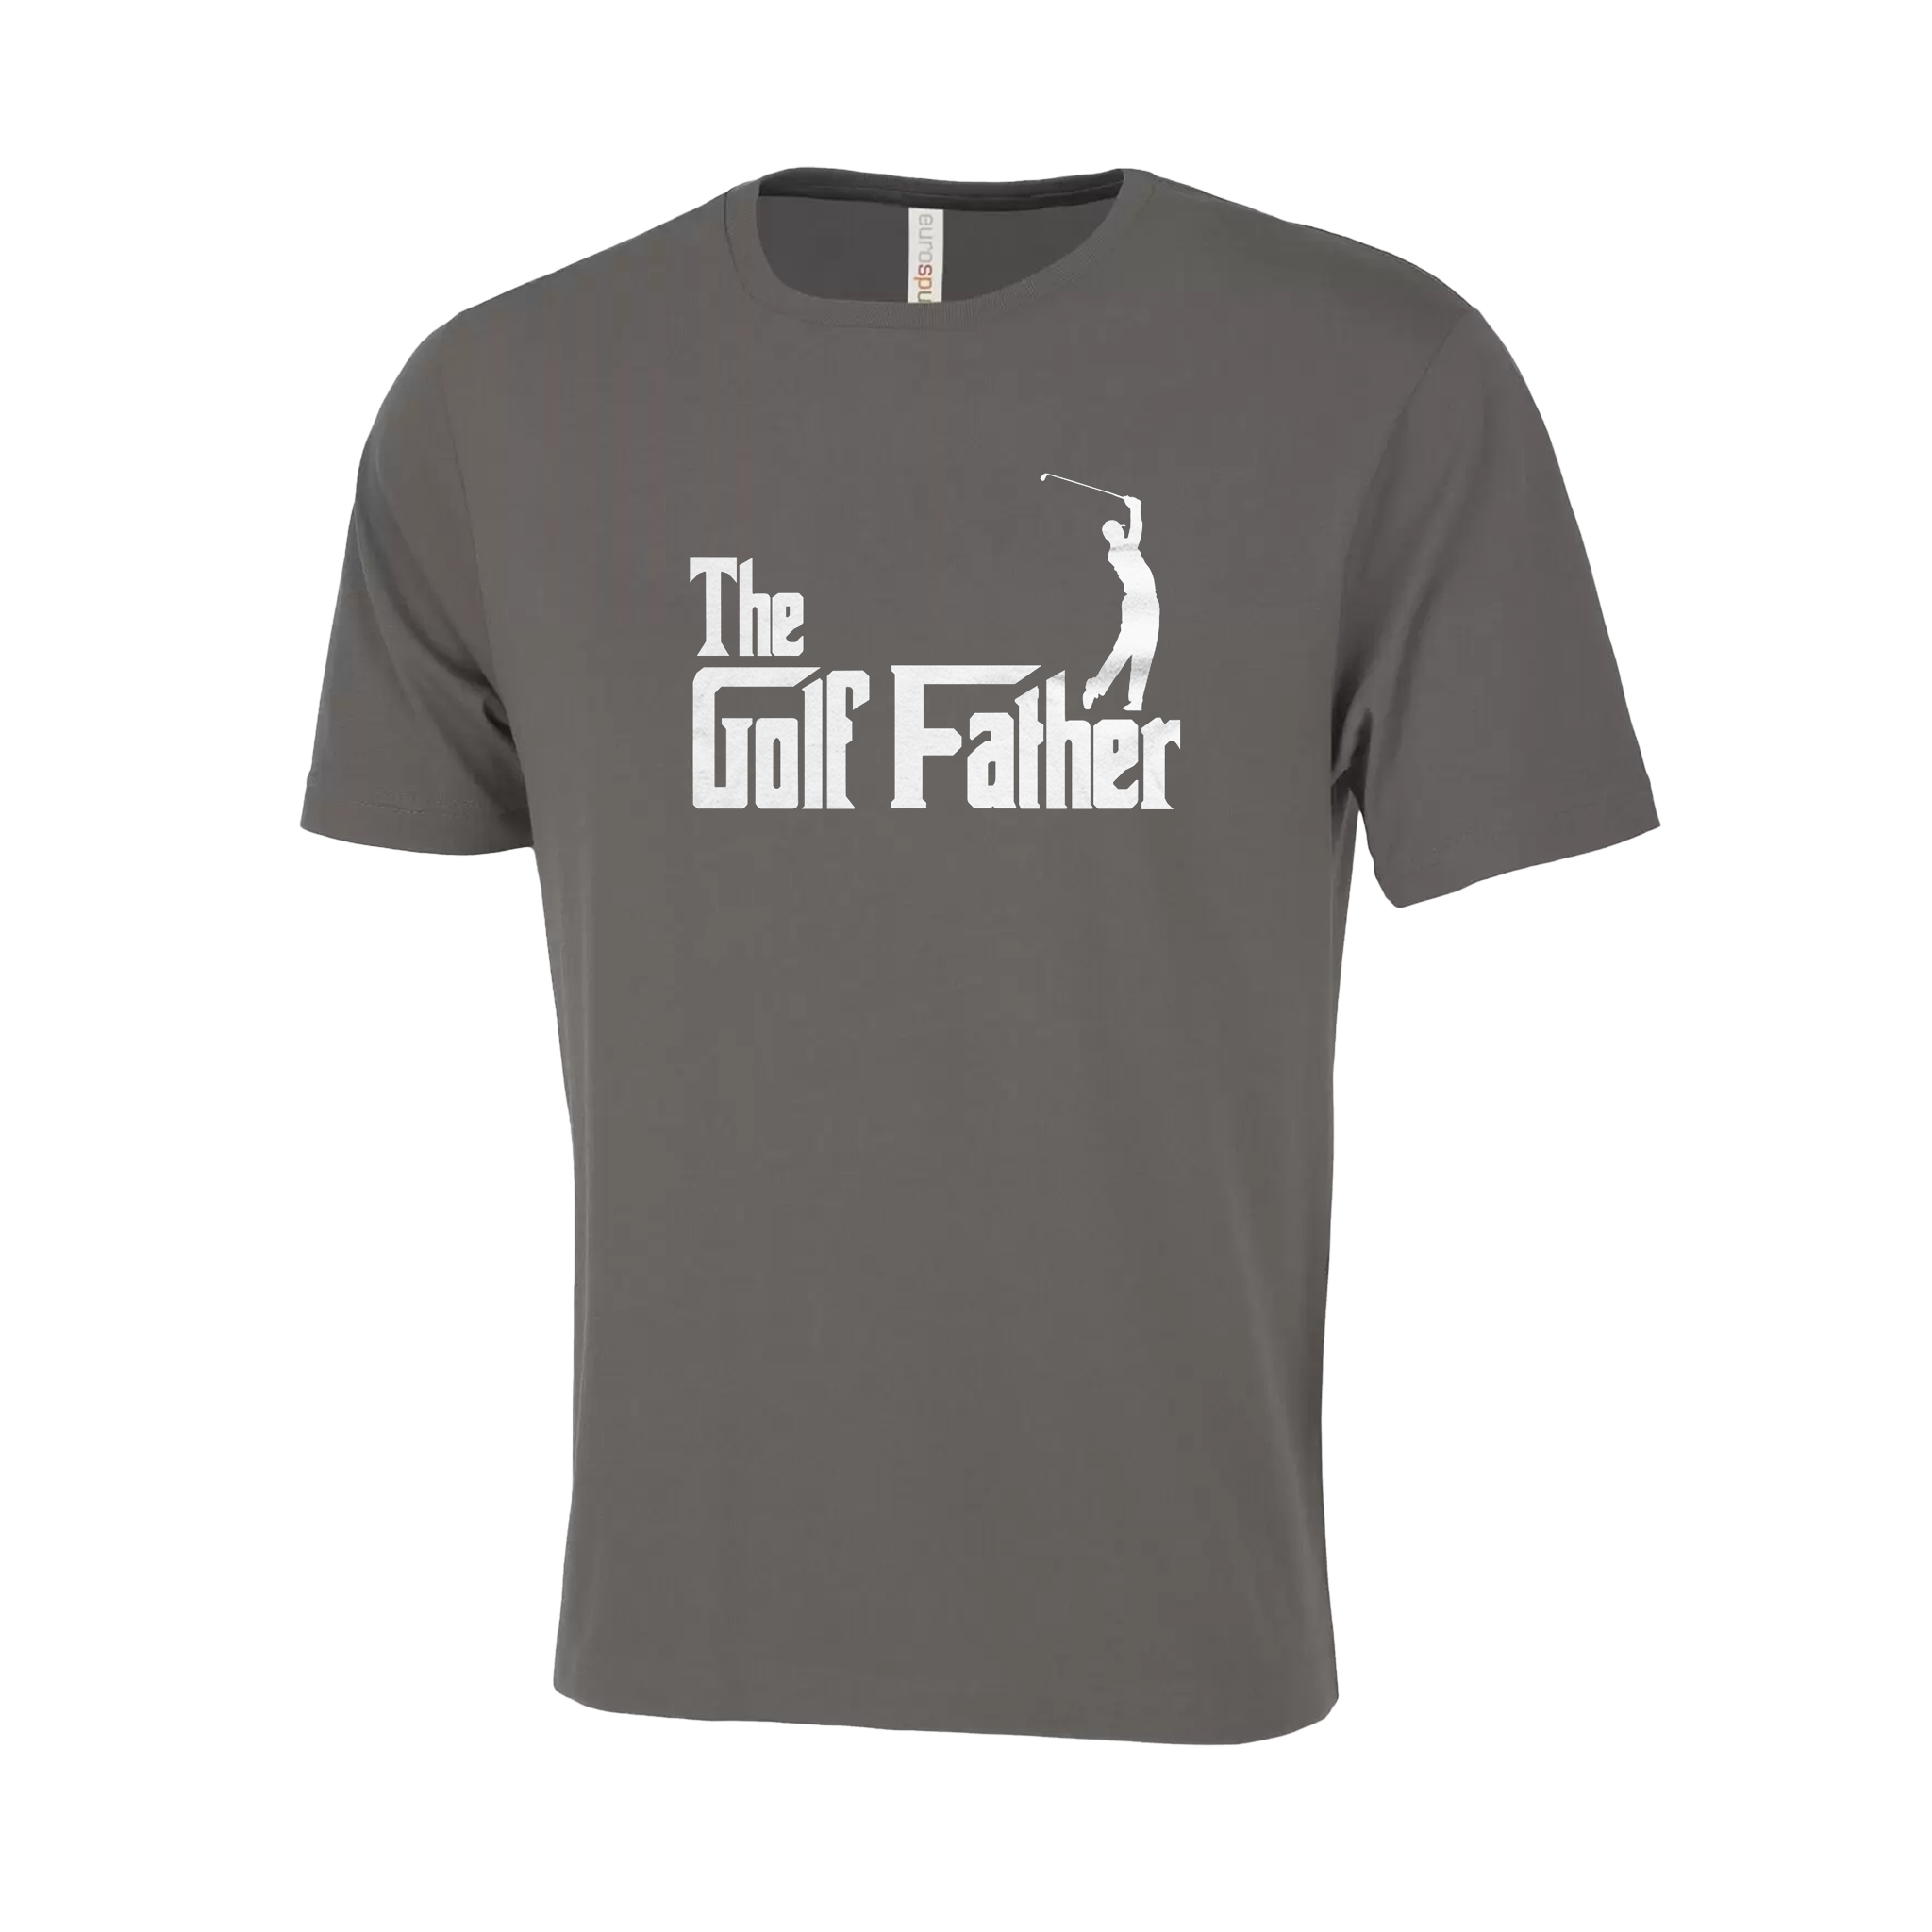 Golf Father Novelty T-Shirt - Adult Unisex Sizing XS-4XL - Charcoal